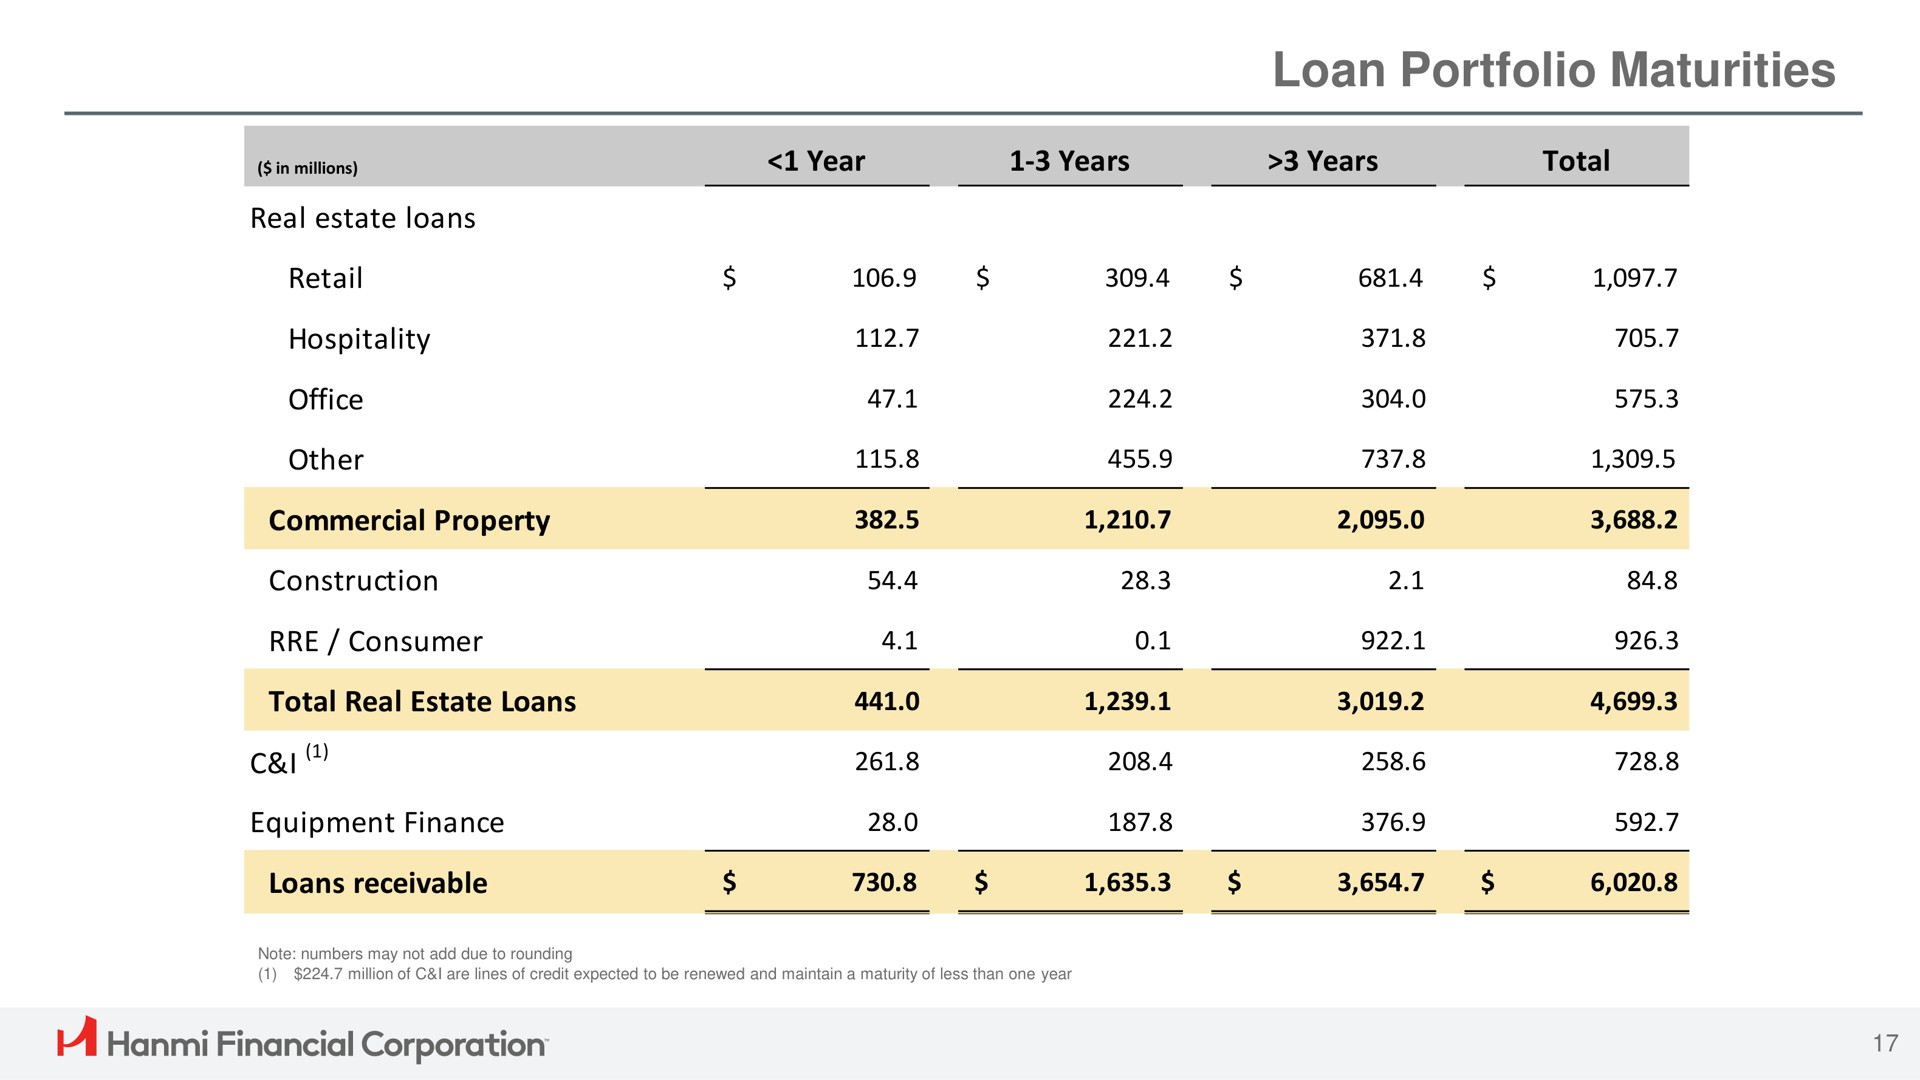 loan portfolio maturities a financial corporation | Hanmi Financial